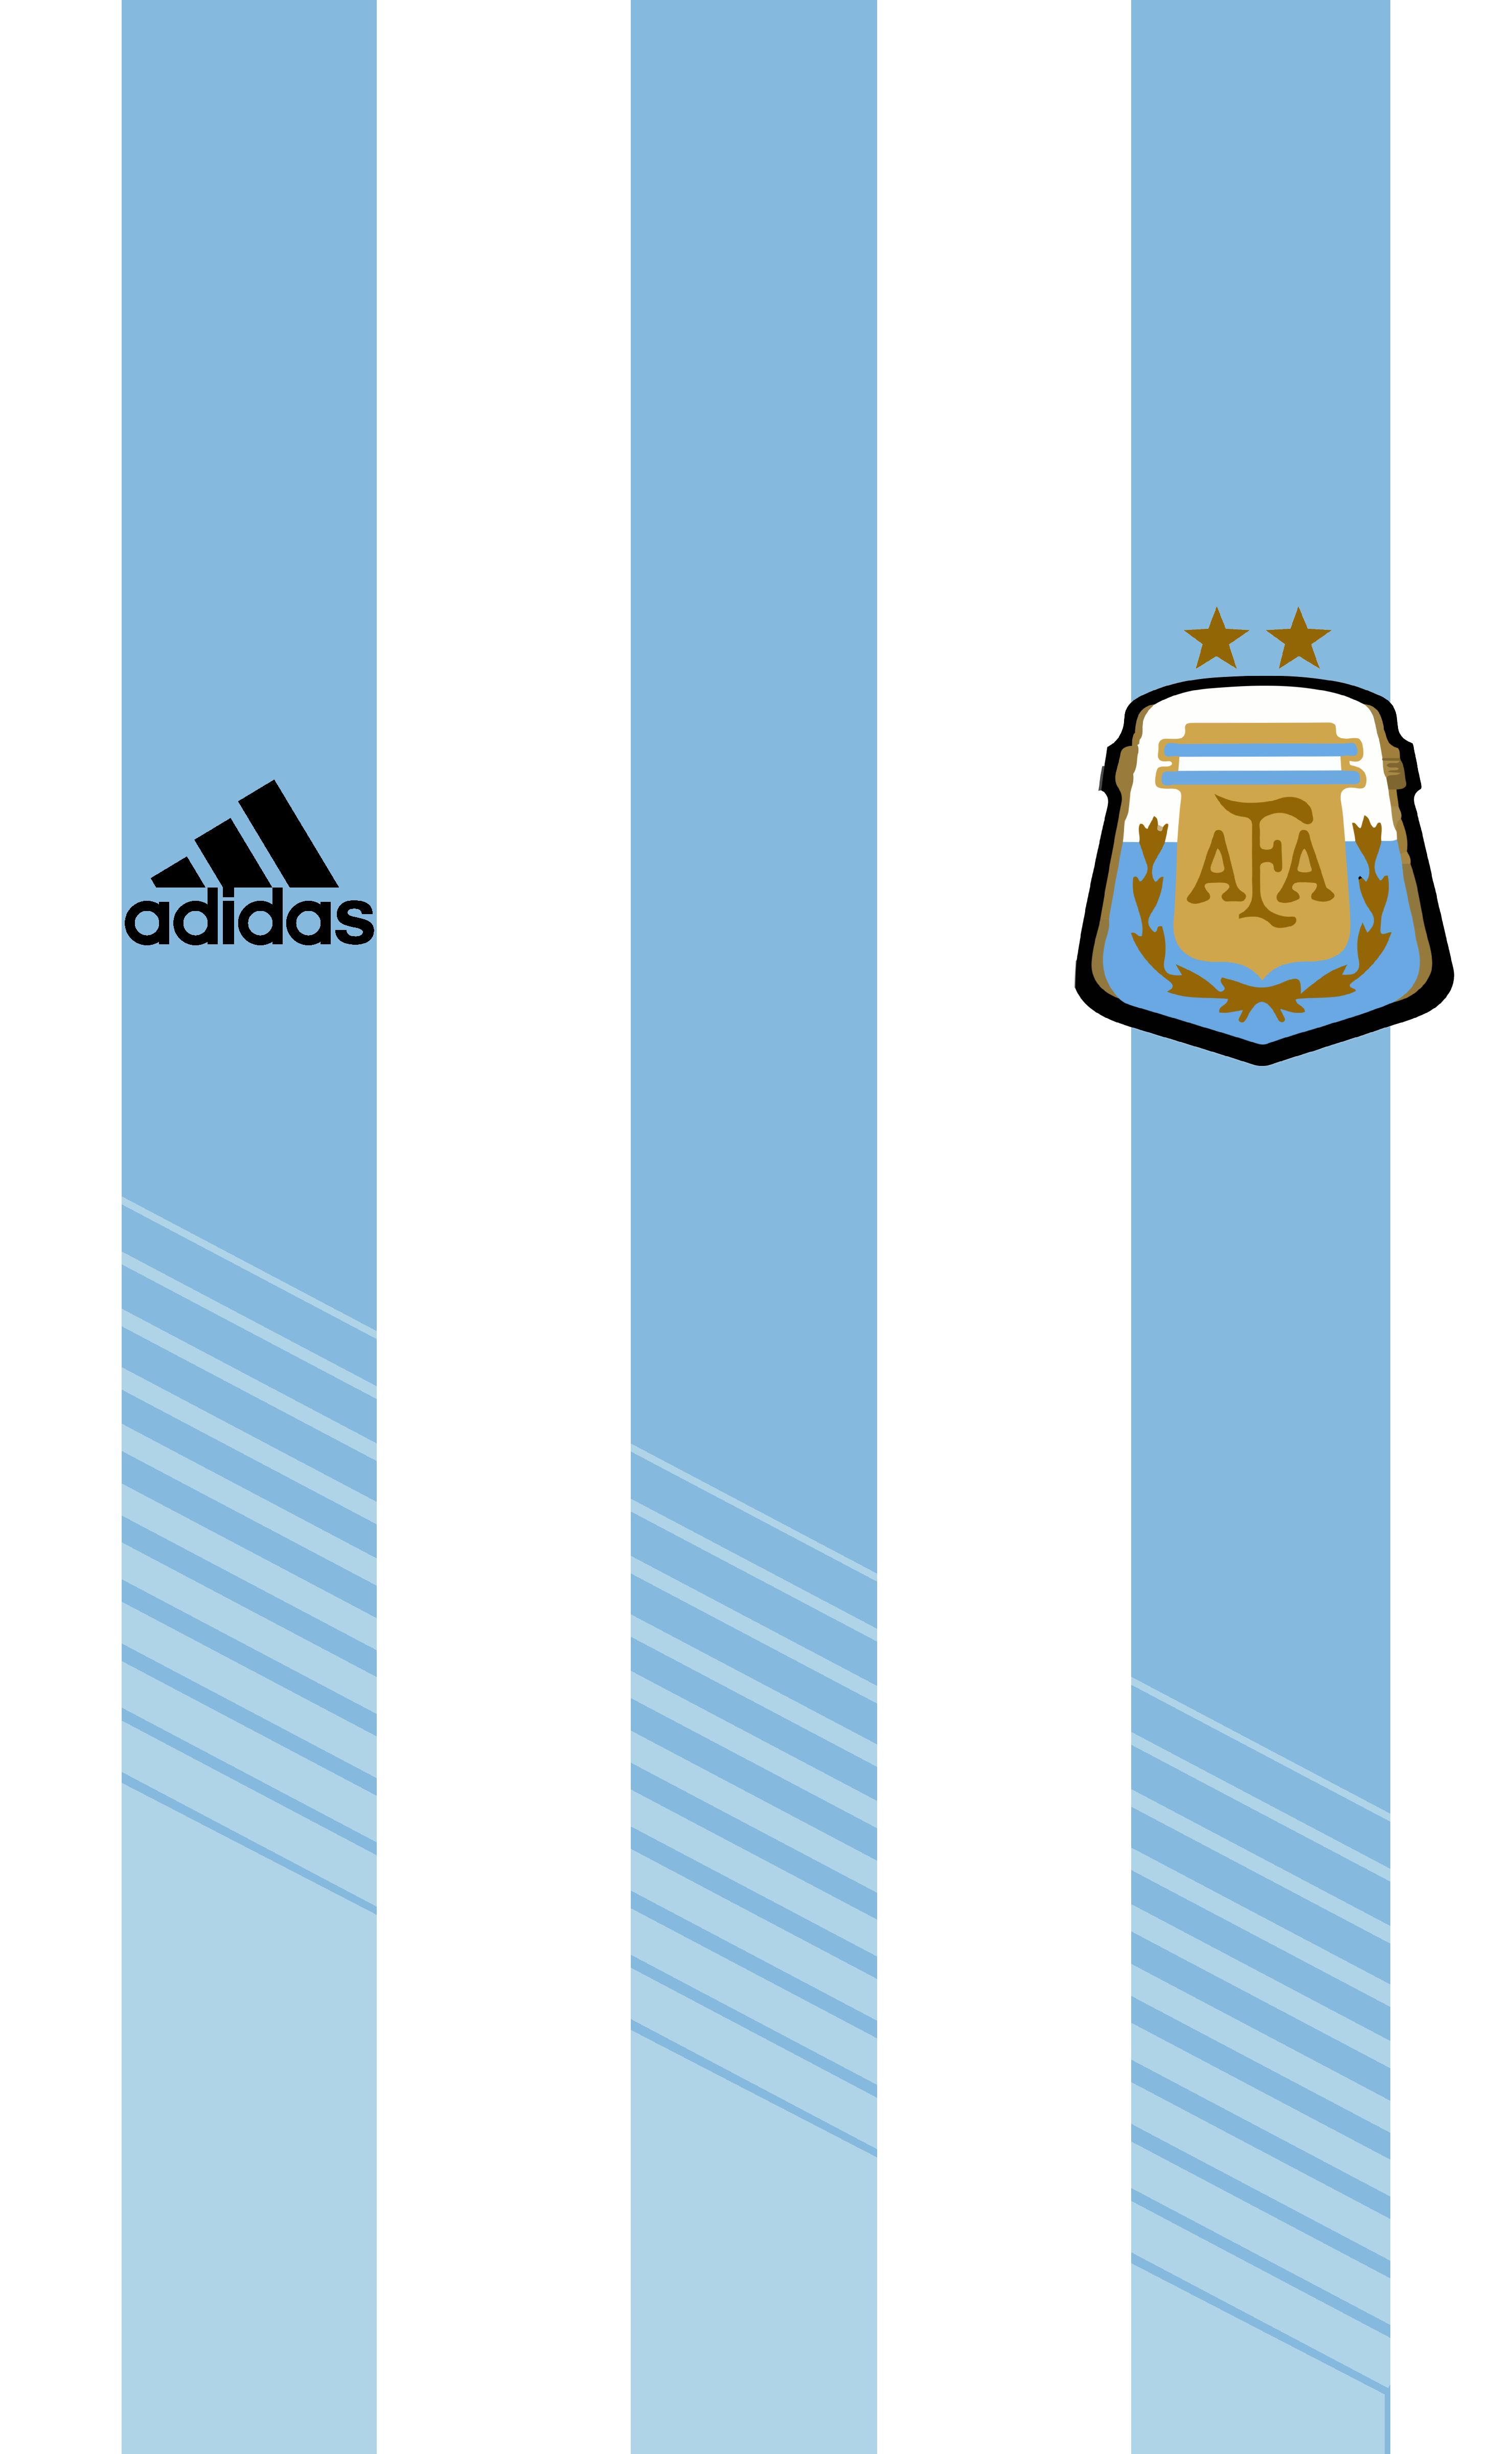 Adidas Argentina Wallpapers